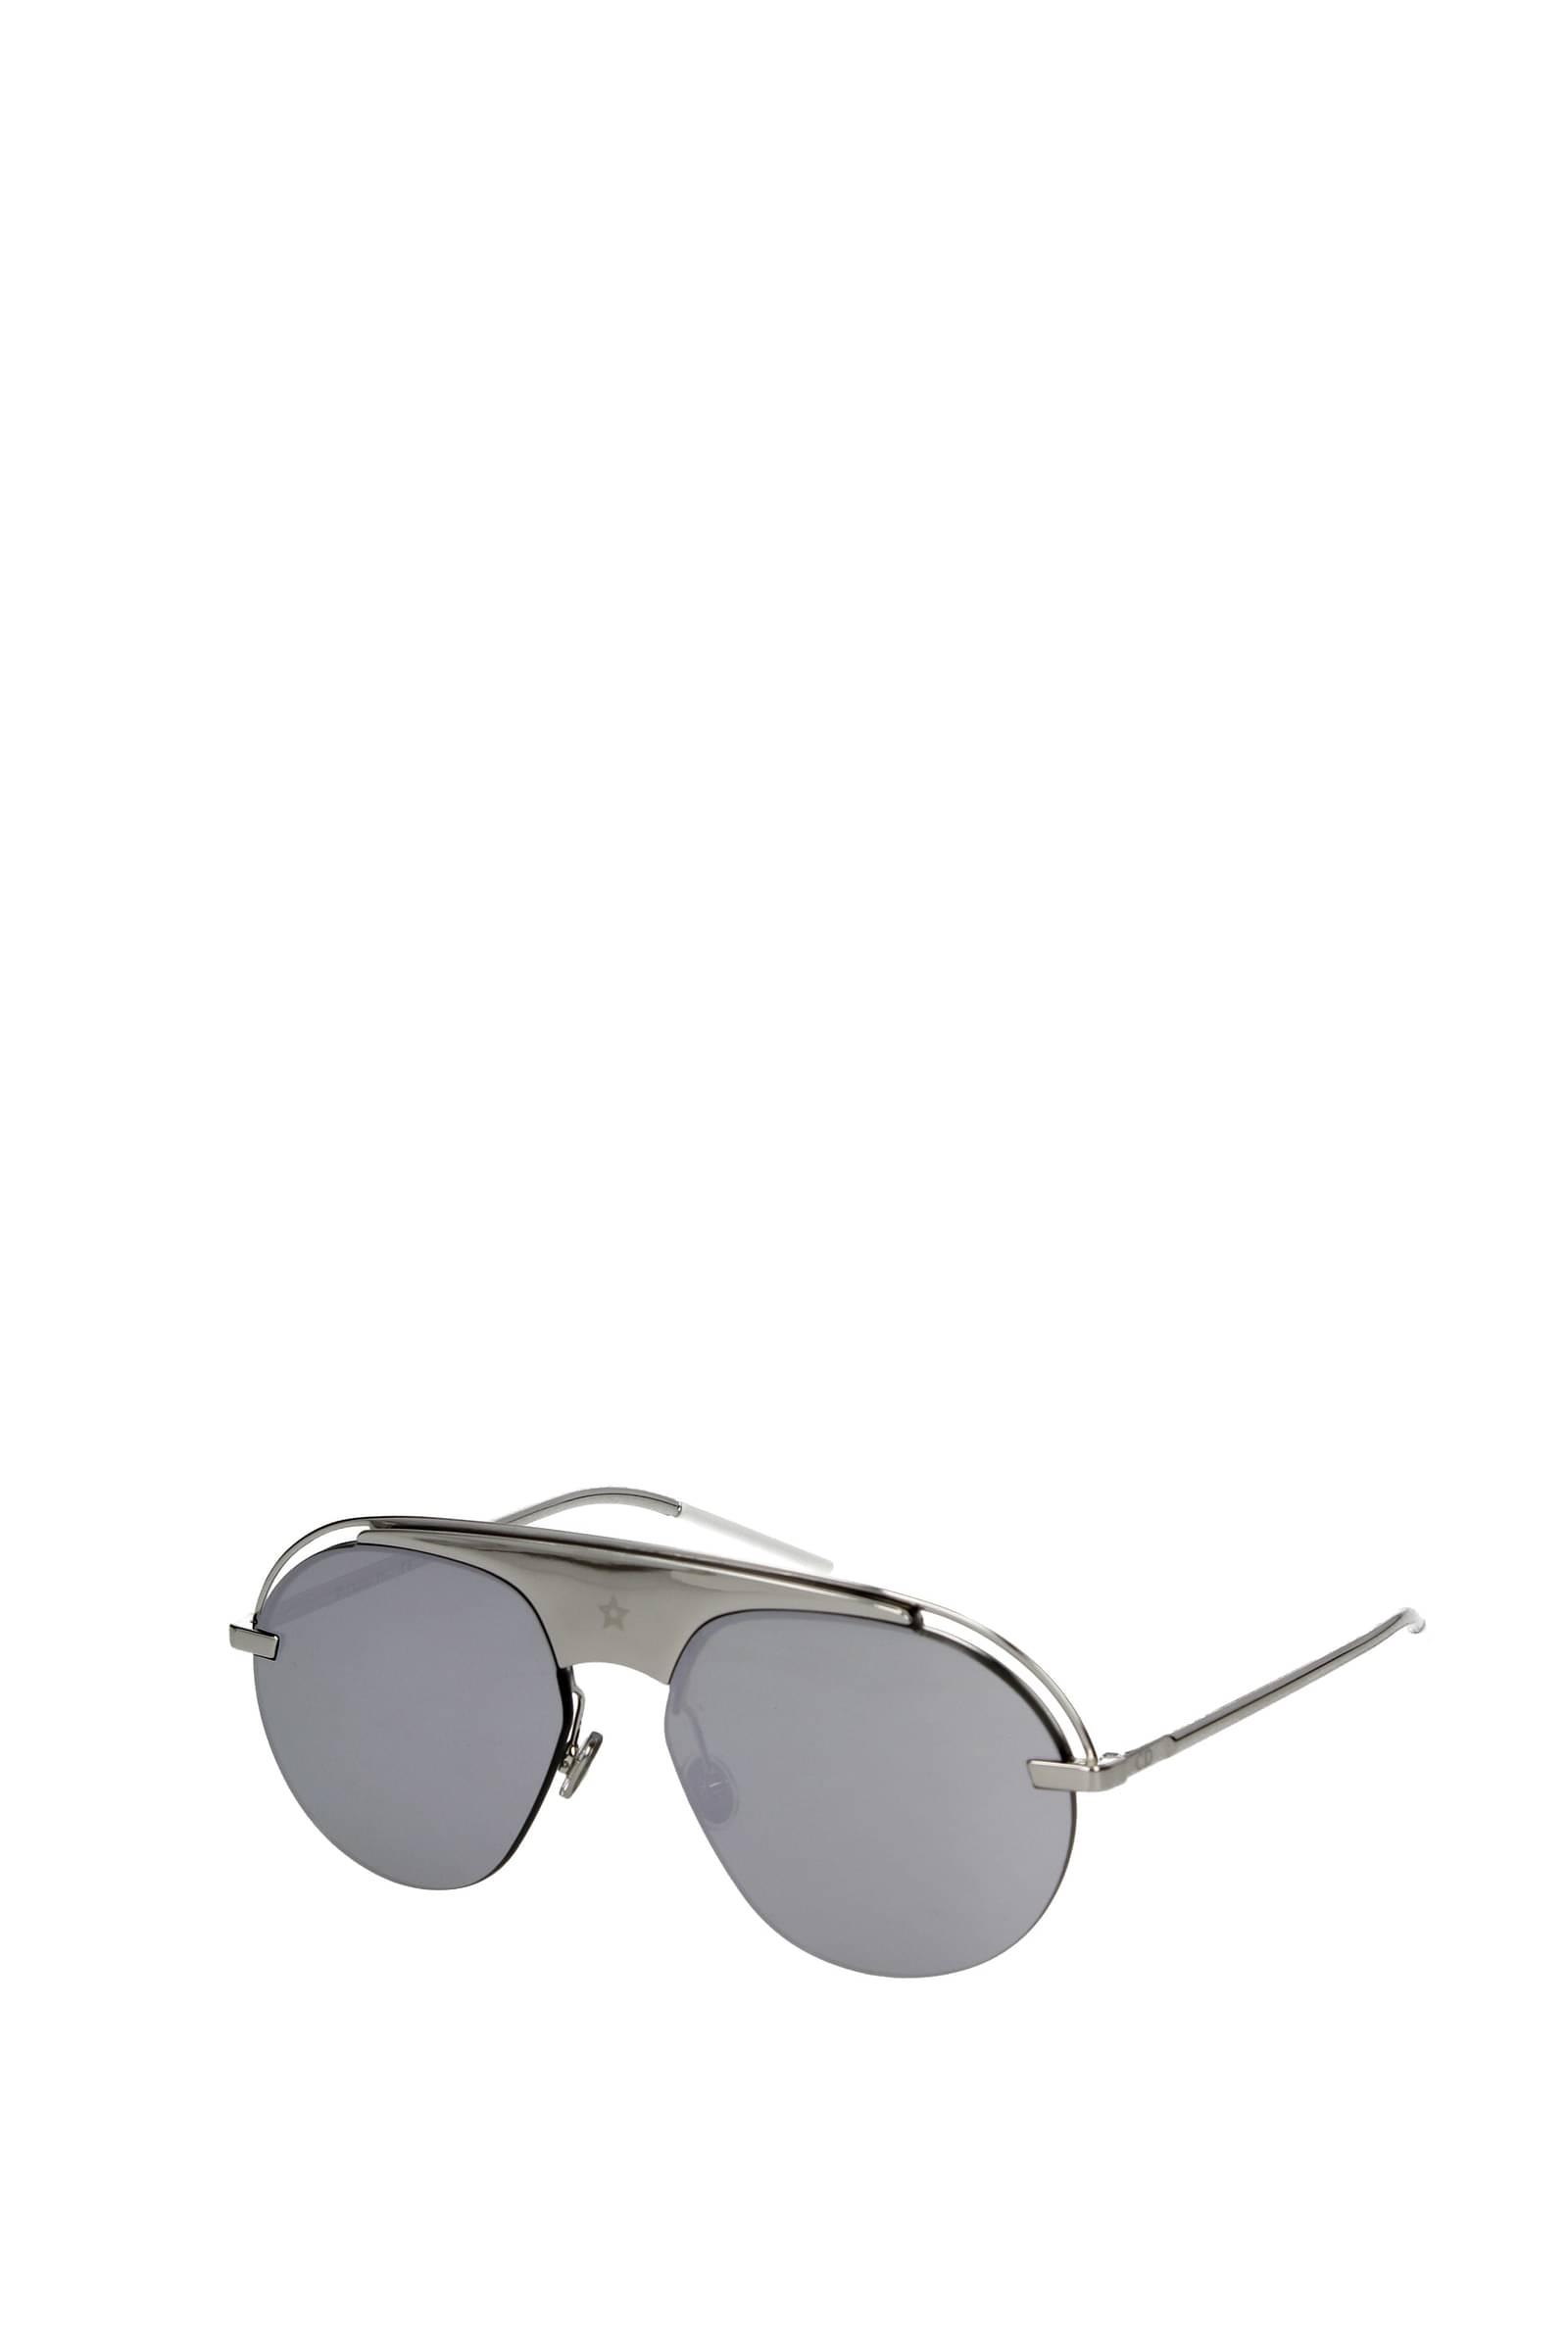 Dior Sunglasses Metal Silver in Gray for Men